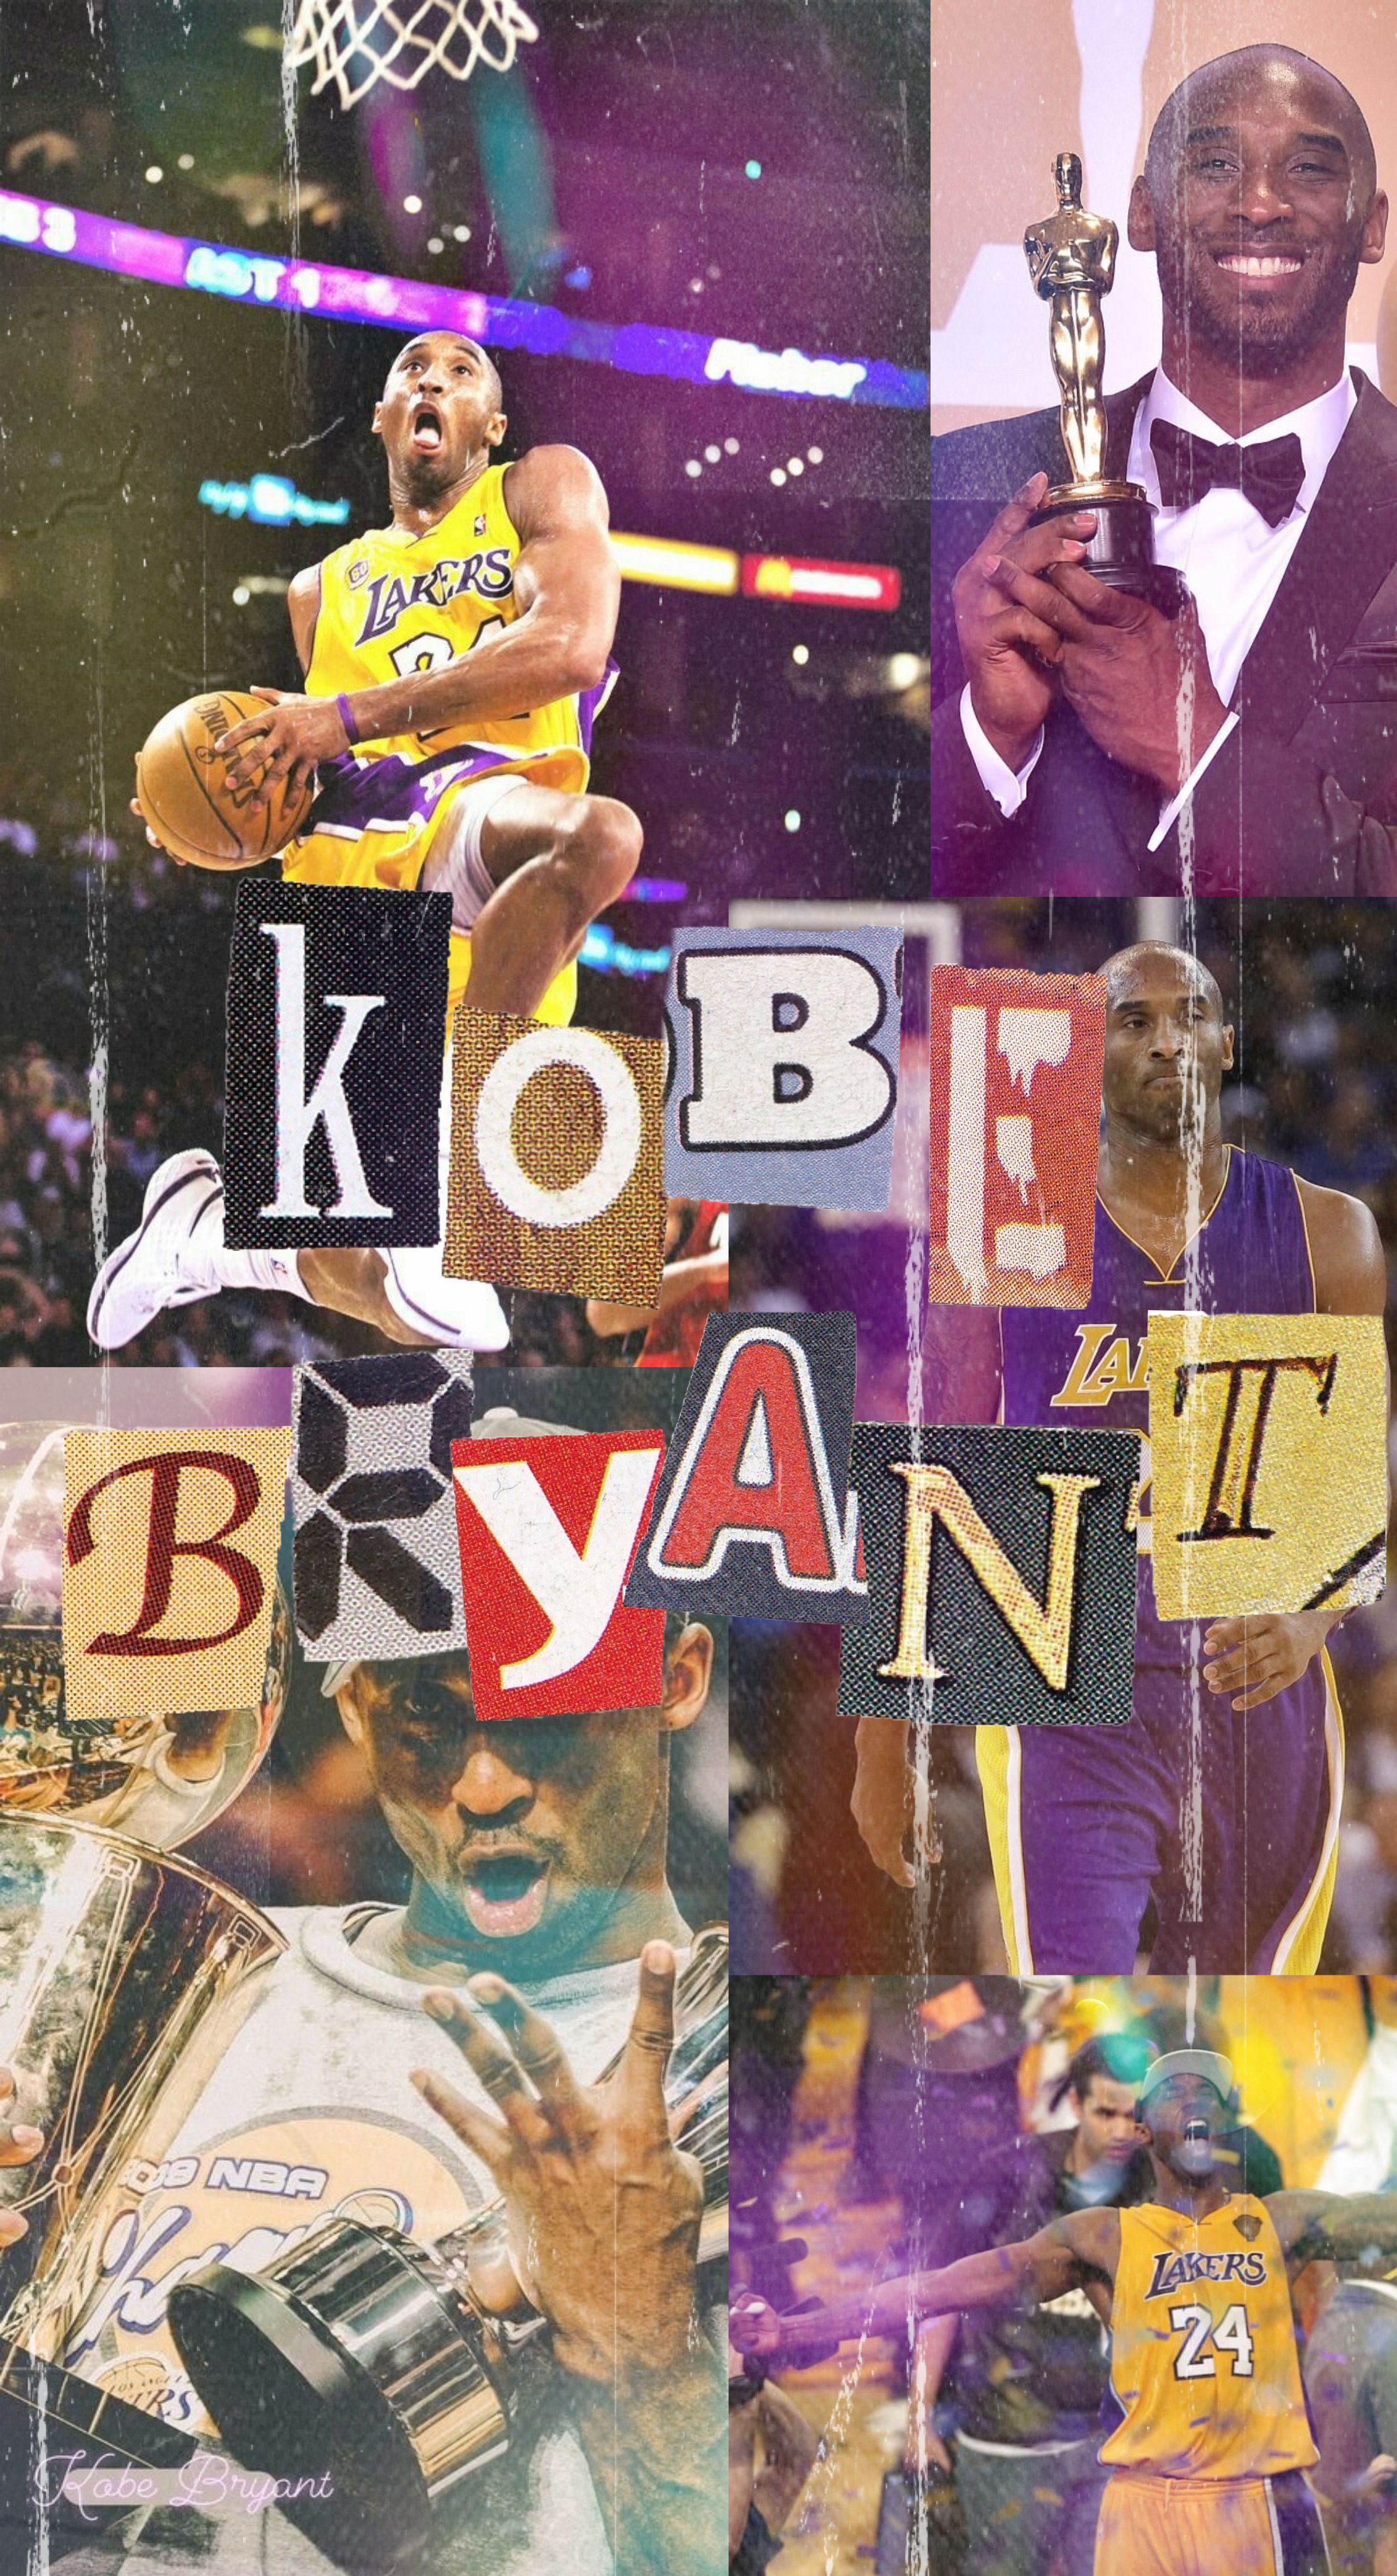 Kobe Bryant wallpaper. Kobe bryant wallpaper, Cartoon wallpaper iphone, Travis scott iphone wallpaper